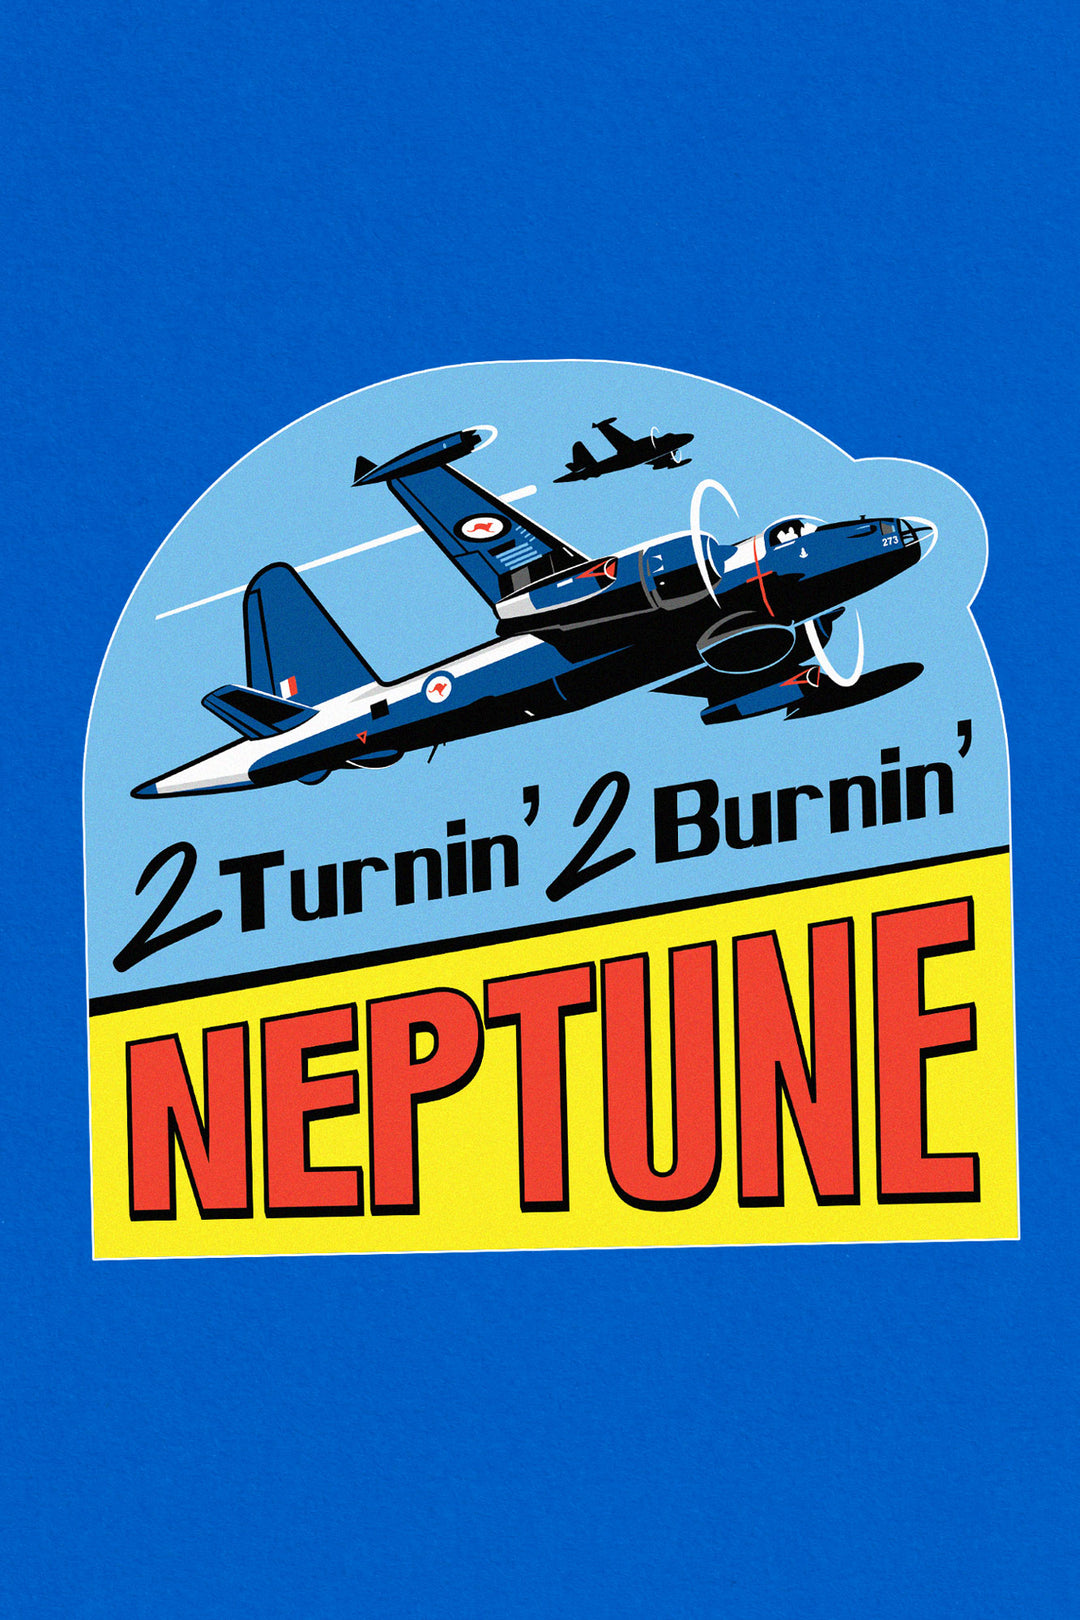 P-2 Neptune - Sticker